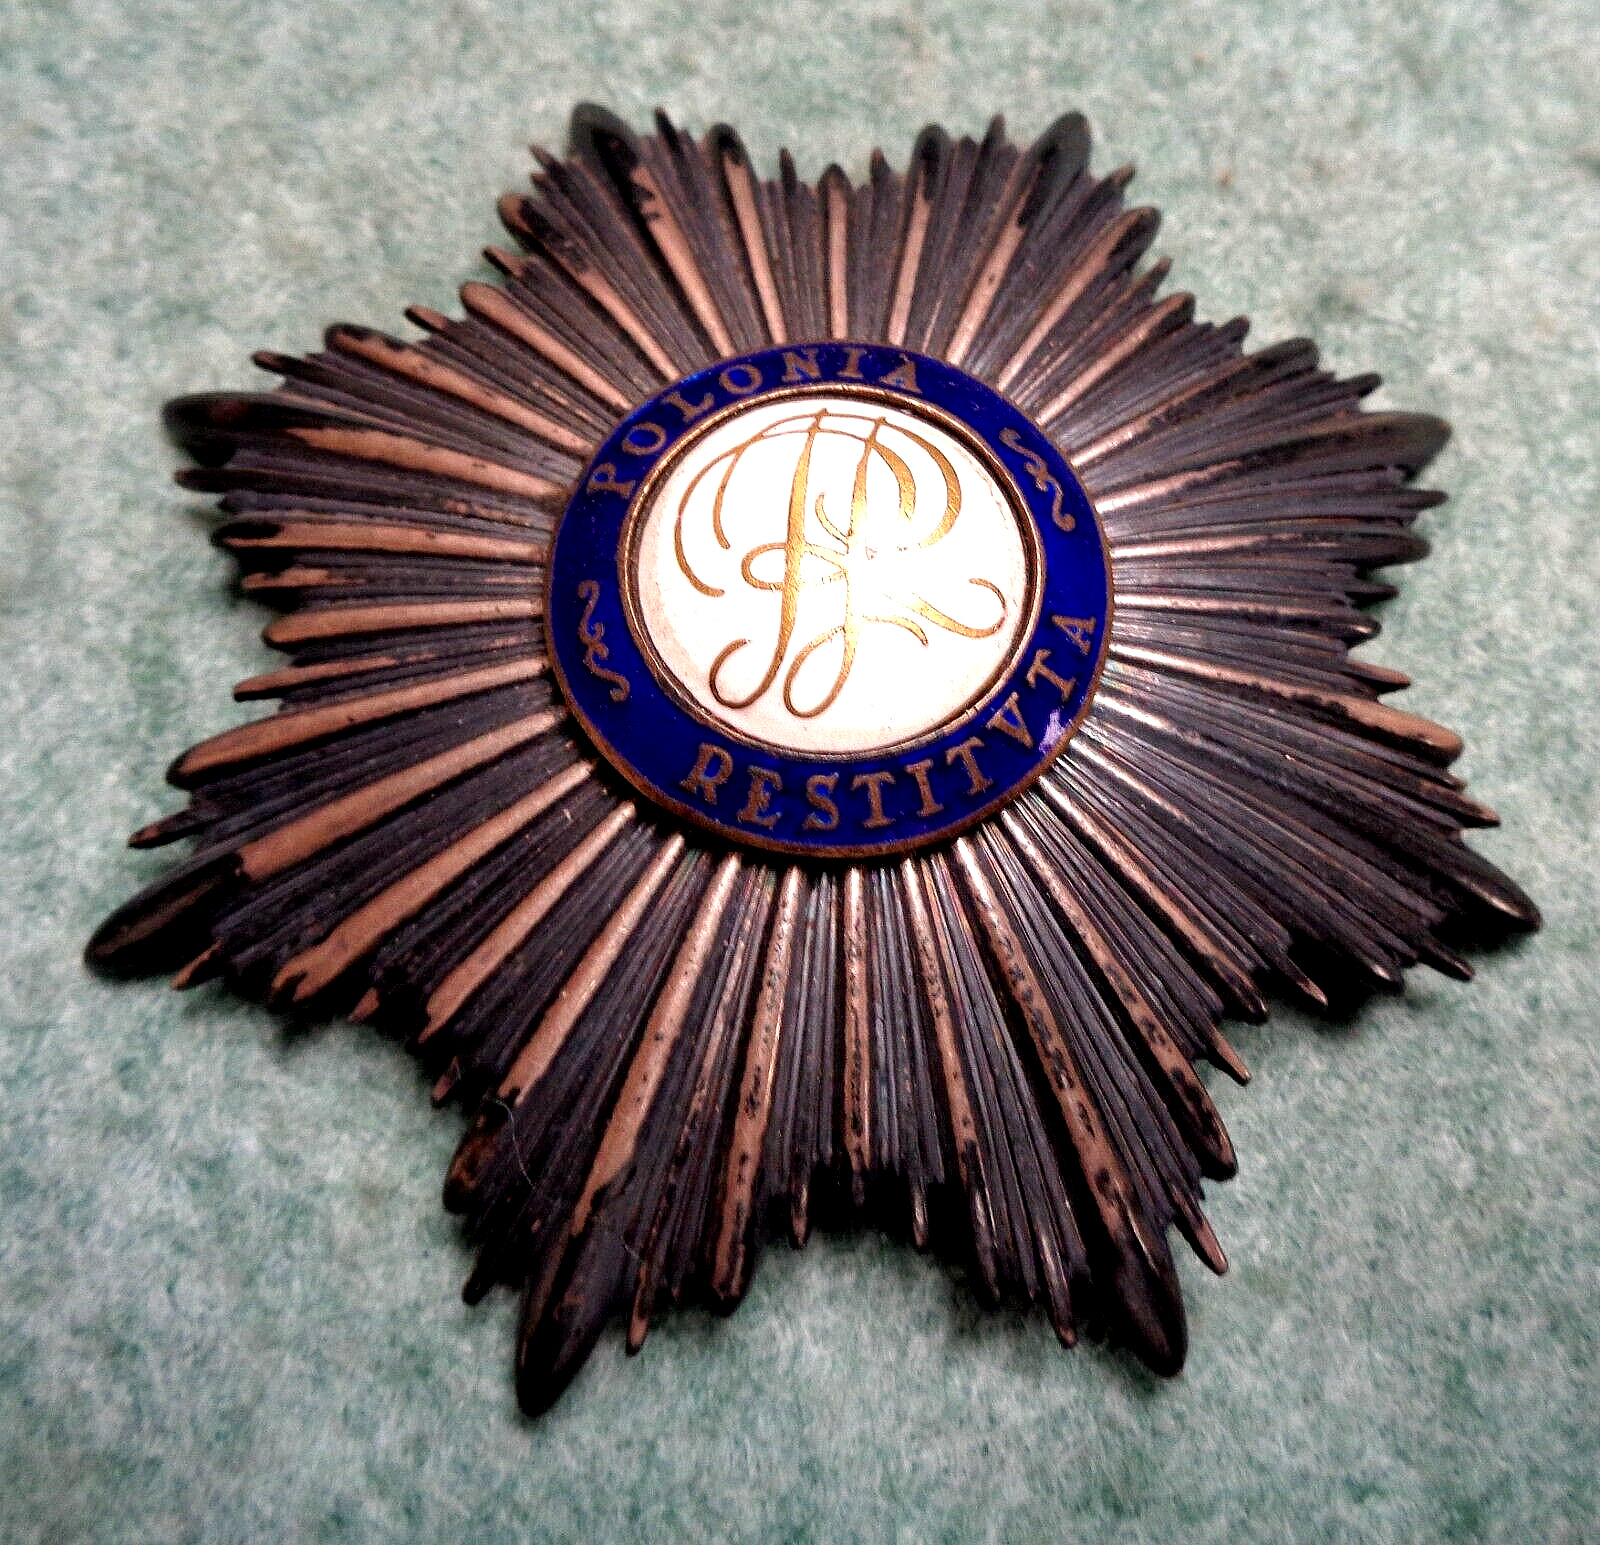 WWII WW2 POLISH ORDER OF POLONIA RESTITUTA 1918 Breast Star-SILVER Marked